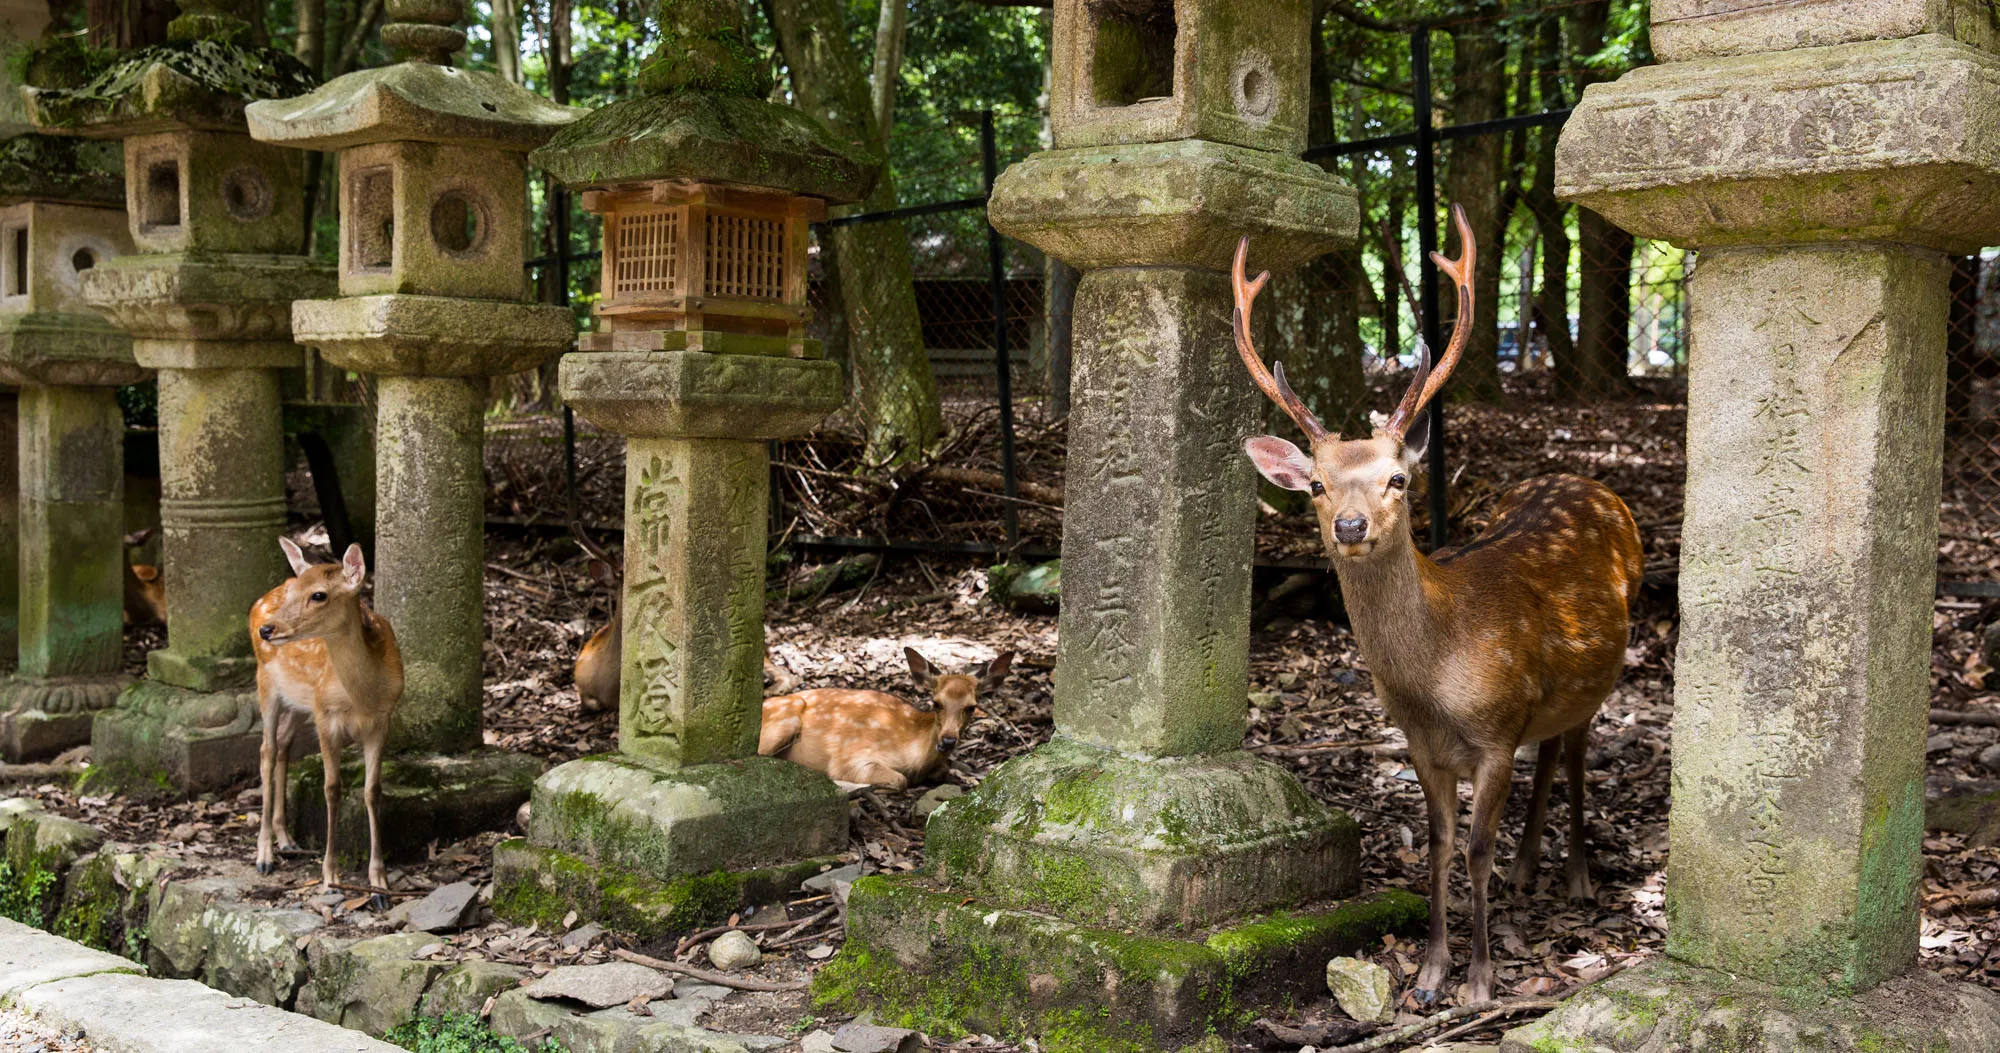 Featured image for “Feeding Deer in Nara, Japan”